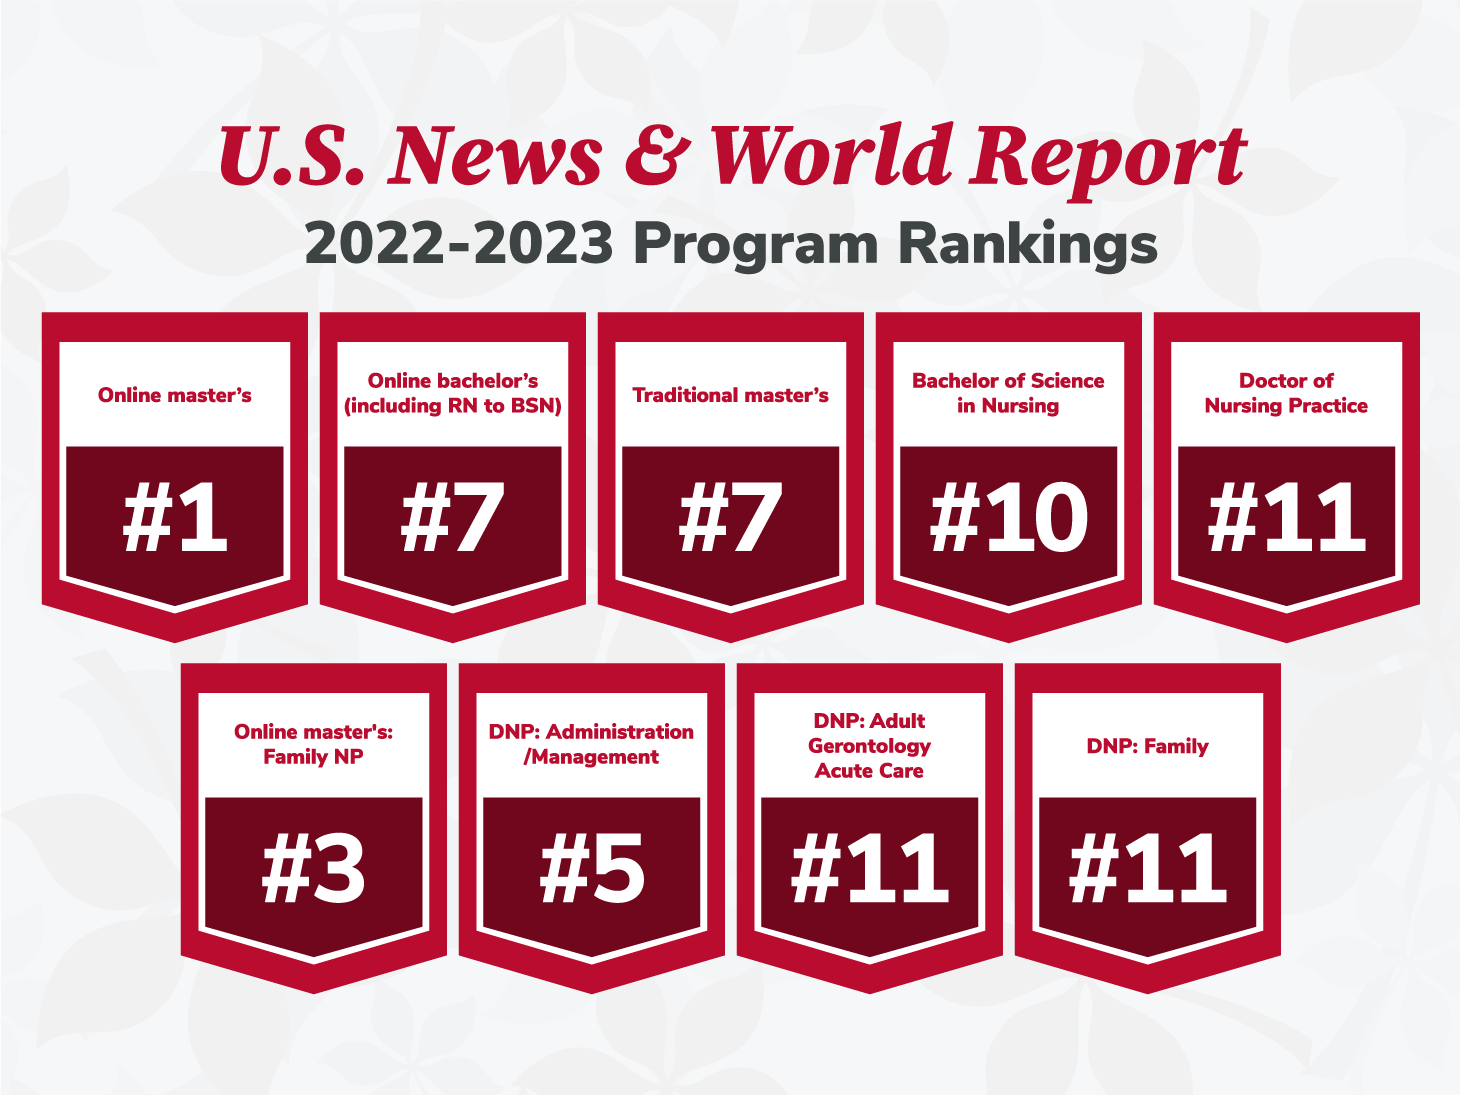 U.S. News & World Report rankings